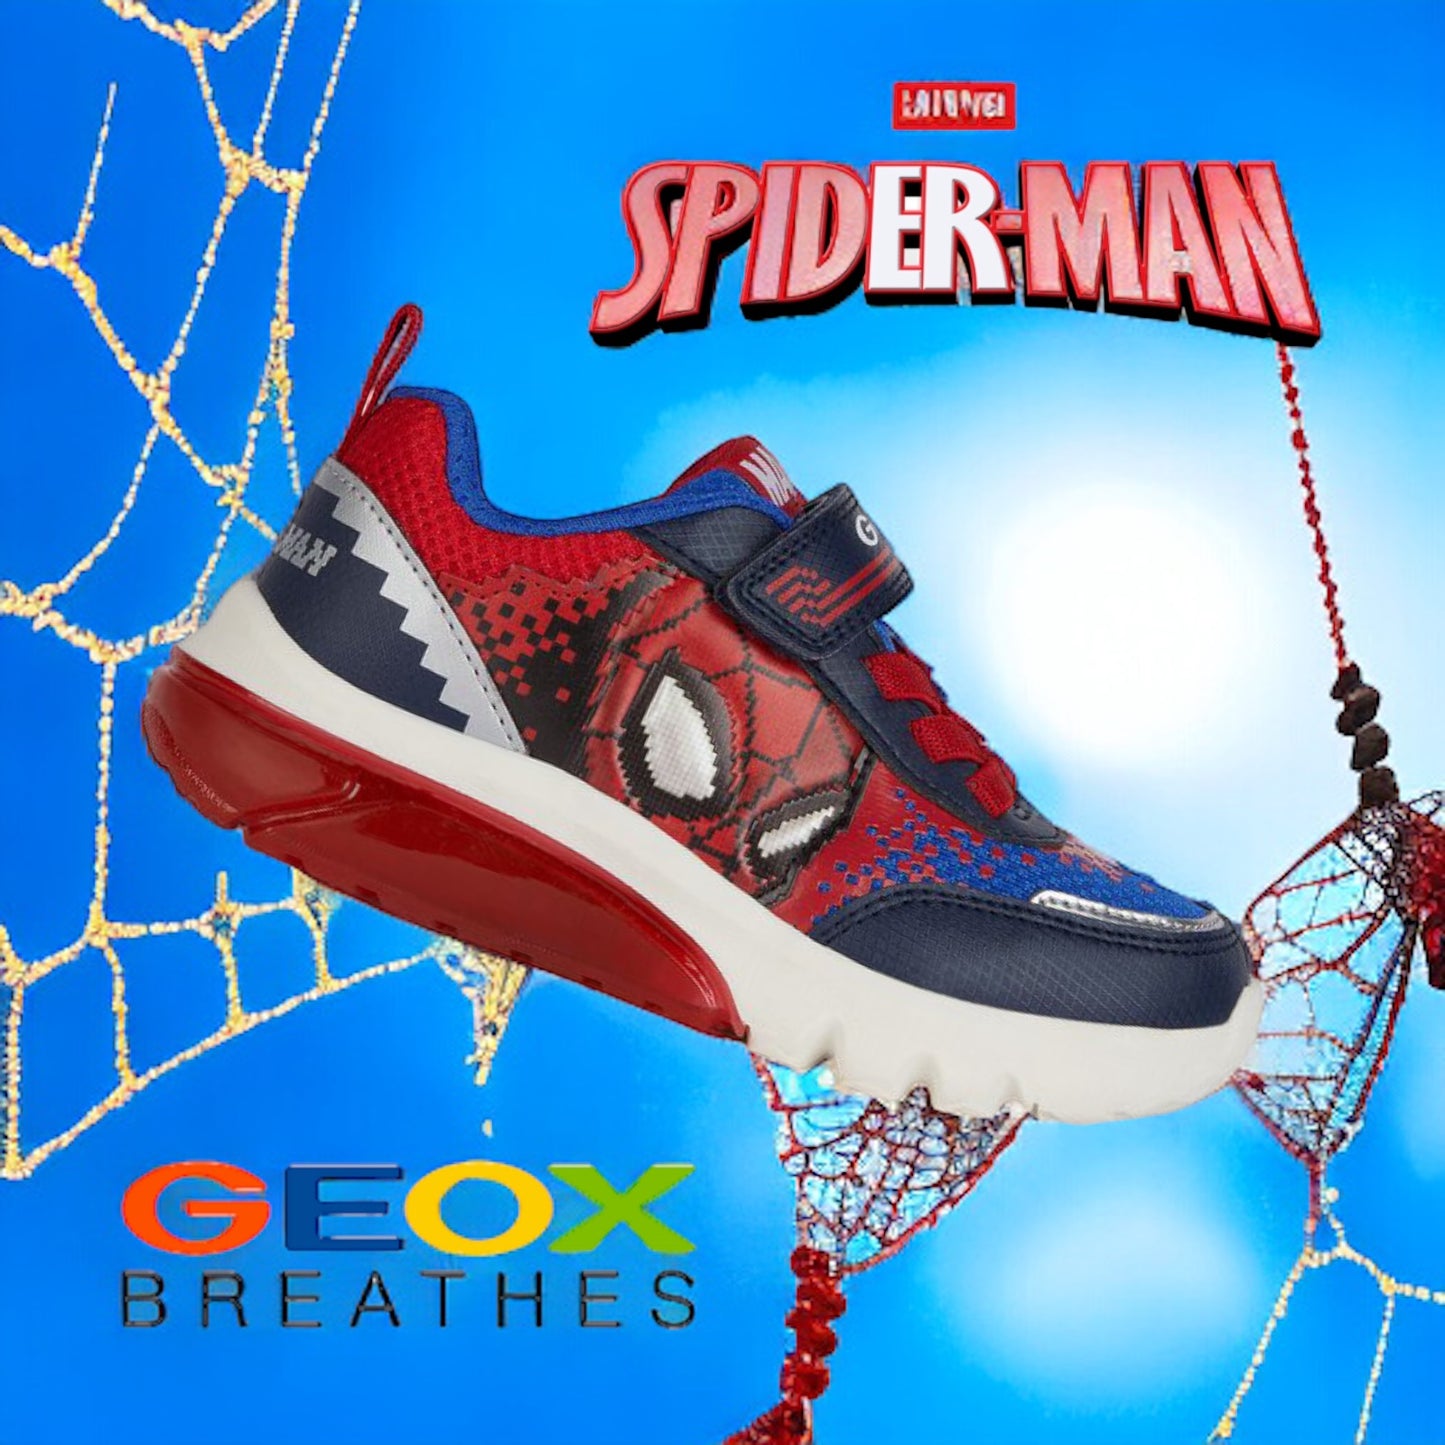 Geox Ciberdron Spiderman lights